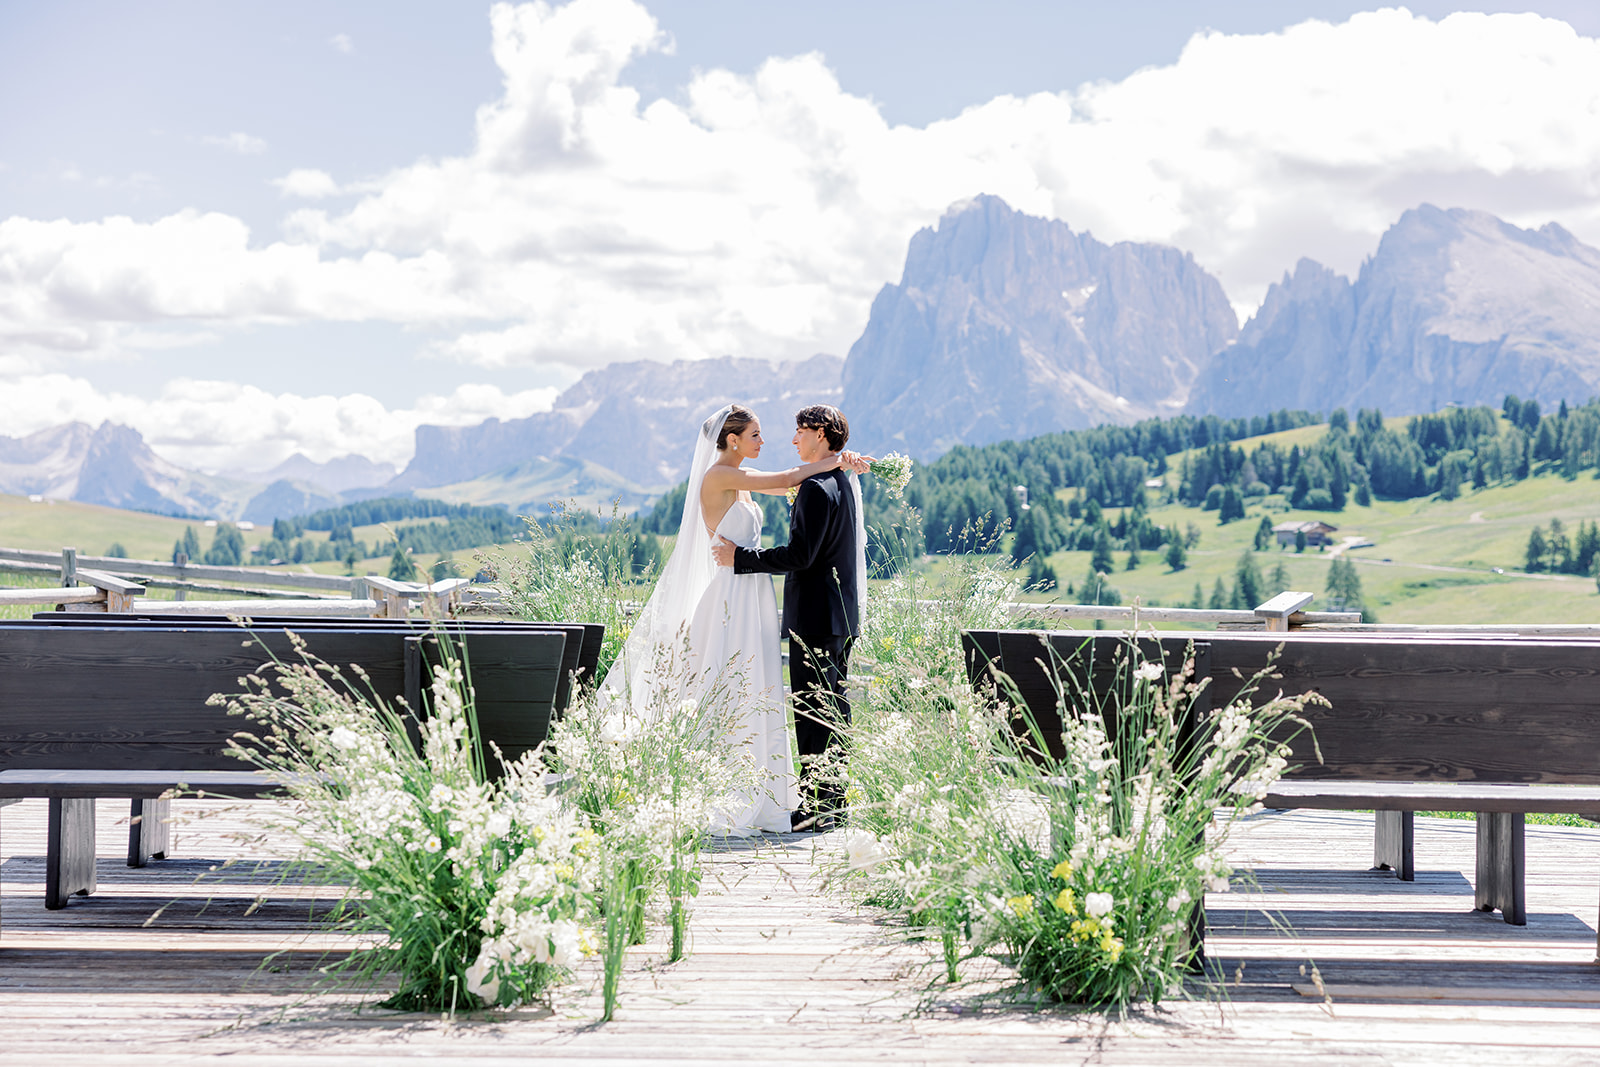 Photogenic Destinations for Romance Travel - Alps